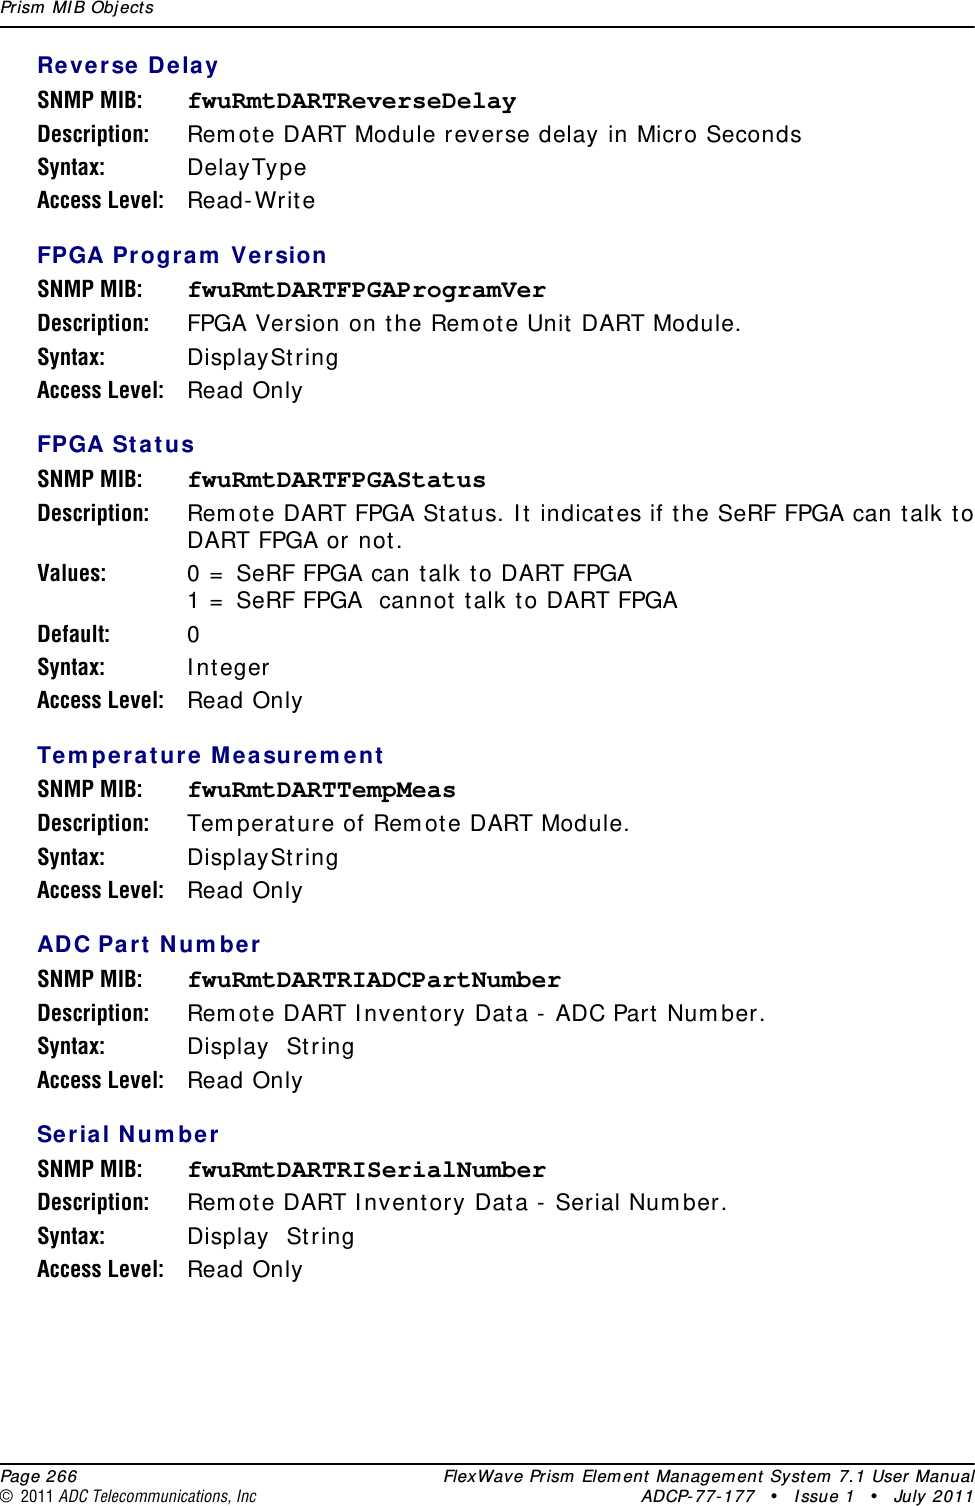 Prism  MI B Obj ect s  Page 266 FlexWave Prism  Elem ent Managem ent  System  7.1 User Manual© 2011 ADC Telecommunications, Inc ADCP-77- 177 • I ssue 1 • July 2011Reverse Dela ySNMP MIB: fwuRmtDARTReverseDelayDescription: Rem ot e DART Module reverse delay in Micro SecondsSyntax: DelayTypeAccess Level: Read- Writ eFPGA Pr ogram  Ver sionSNMP MIB: fwuRmtDARTFPGAProgramVerDescription: FPGA Version on t he Rem ot e Unit  DART Module.Syntax: DisplaySt ringAccess Level: Read OnlyFPGA St atusSNMP MIB: fwuRmtDARTFPGAStatusDescription: Rem ot e DART FPGA St at us. I t indicat es if t he SeRF FPGA can talk t o DART FPGA or not .Values: 0 =  SeRF FPGA can talk t o DART FPGA1 =  SeRF FPGA  cannot t alk t o DART FPGADefault: 0Syntax: I ntegerAccess Level: Read OnlyTe m pera t ure M ea sure m entSNMP MIB: fwuRmtDARTTempMeasDescription: Tem perat ure of Rem ot e DART Module.Syntax: DisplaySt ringAccess Level: Read OnlyADC Pa rt N um berSNMP MIB: fwuRmtDARTRIADCPartNumberDescription: Rem ot e DART I nventory Data -  ADC Part  Num ber.Syntax: Display  St ringAccess Level: Read OnlySe rial N um berSNMP MIB: fwuRmtDARTRISerialNumberDescription: Rem ot e DART I nventory Data -  Serial Num ber.Syntax: Display  St ringAccess Level: Read Only